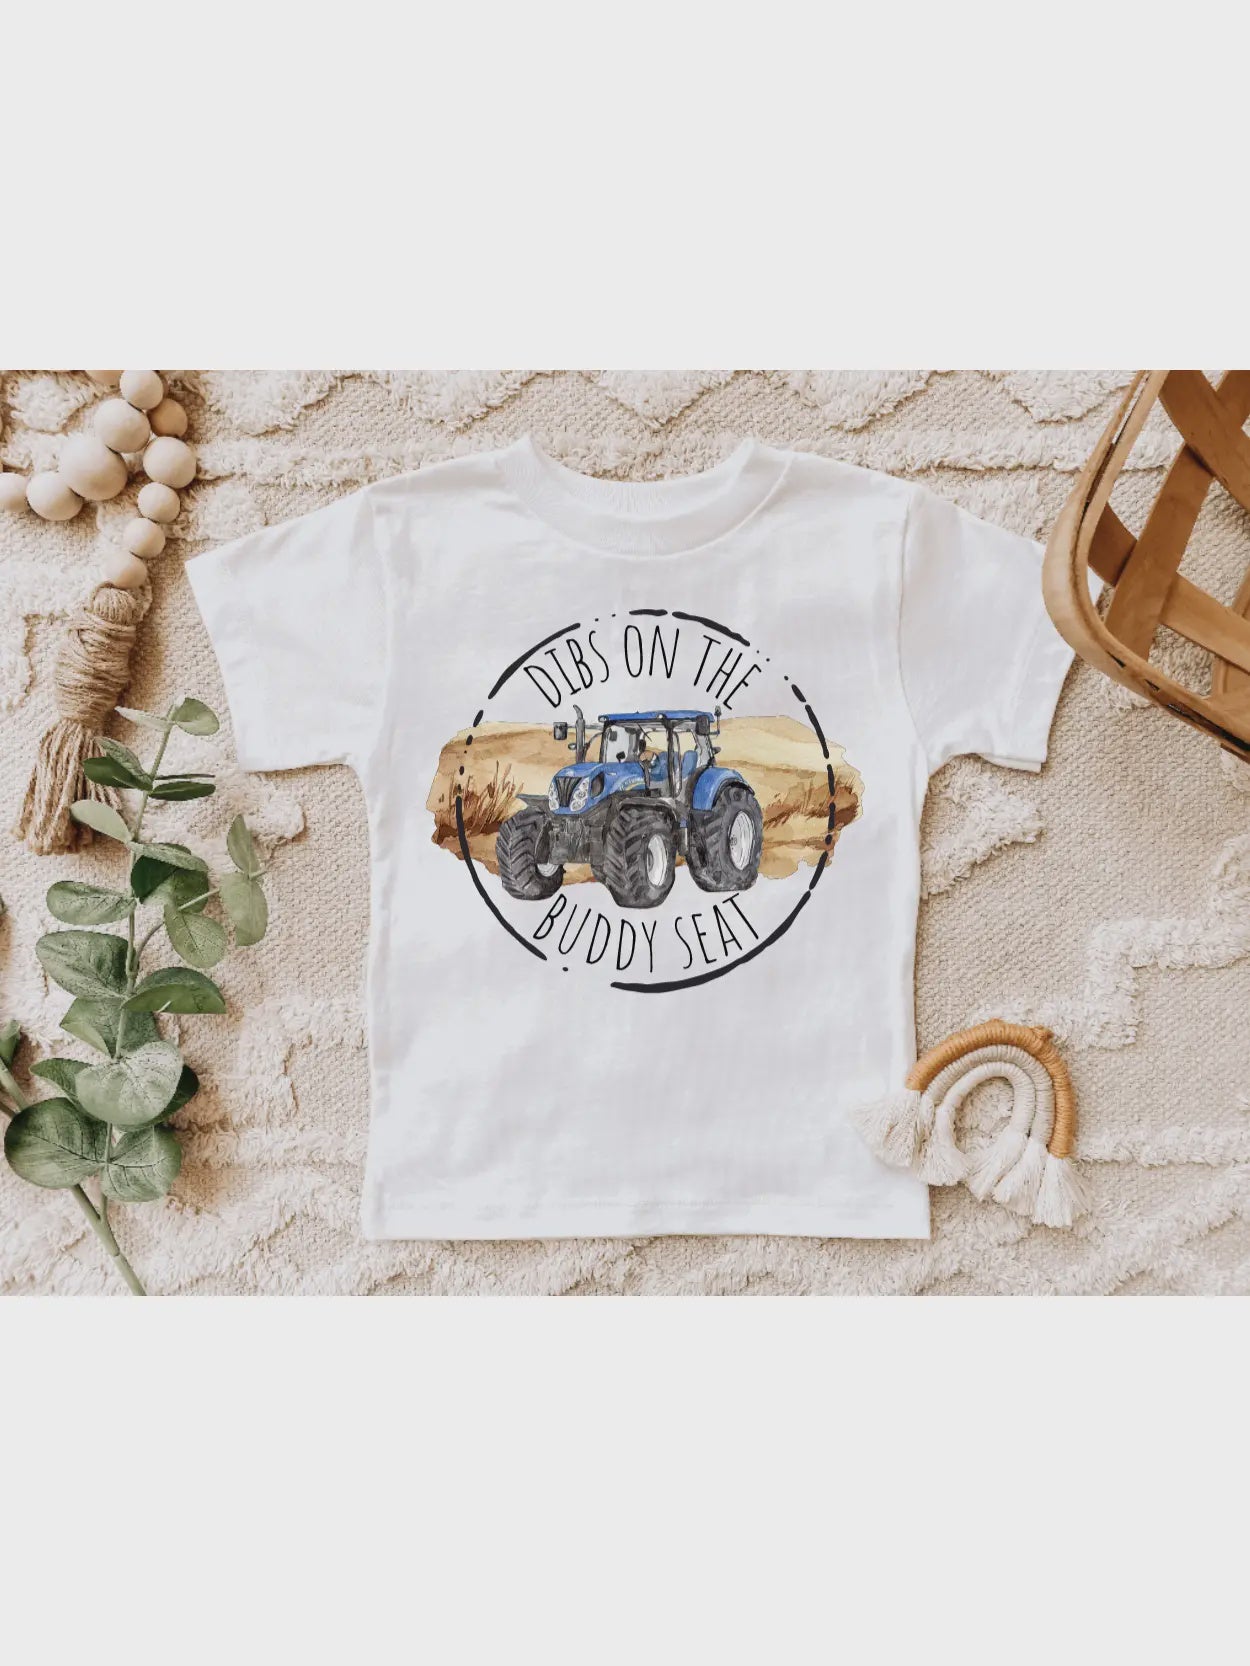 Avary Mae Inspirations - Cute Farm Tee Shirts - Blue Tractor